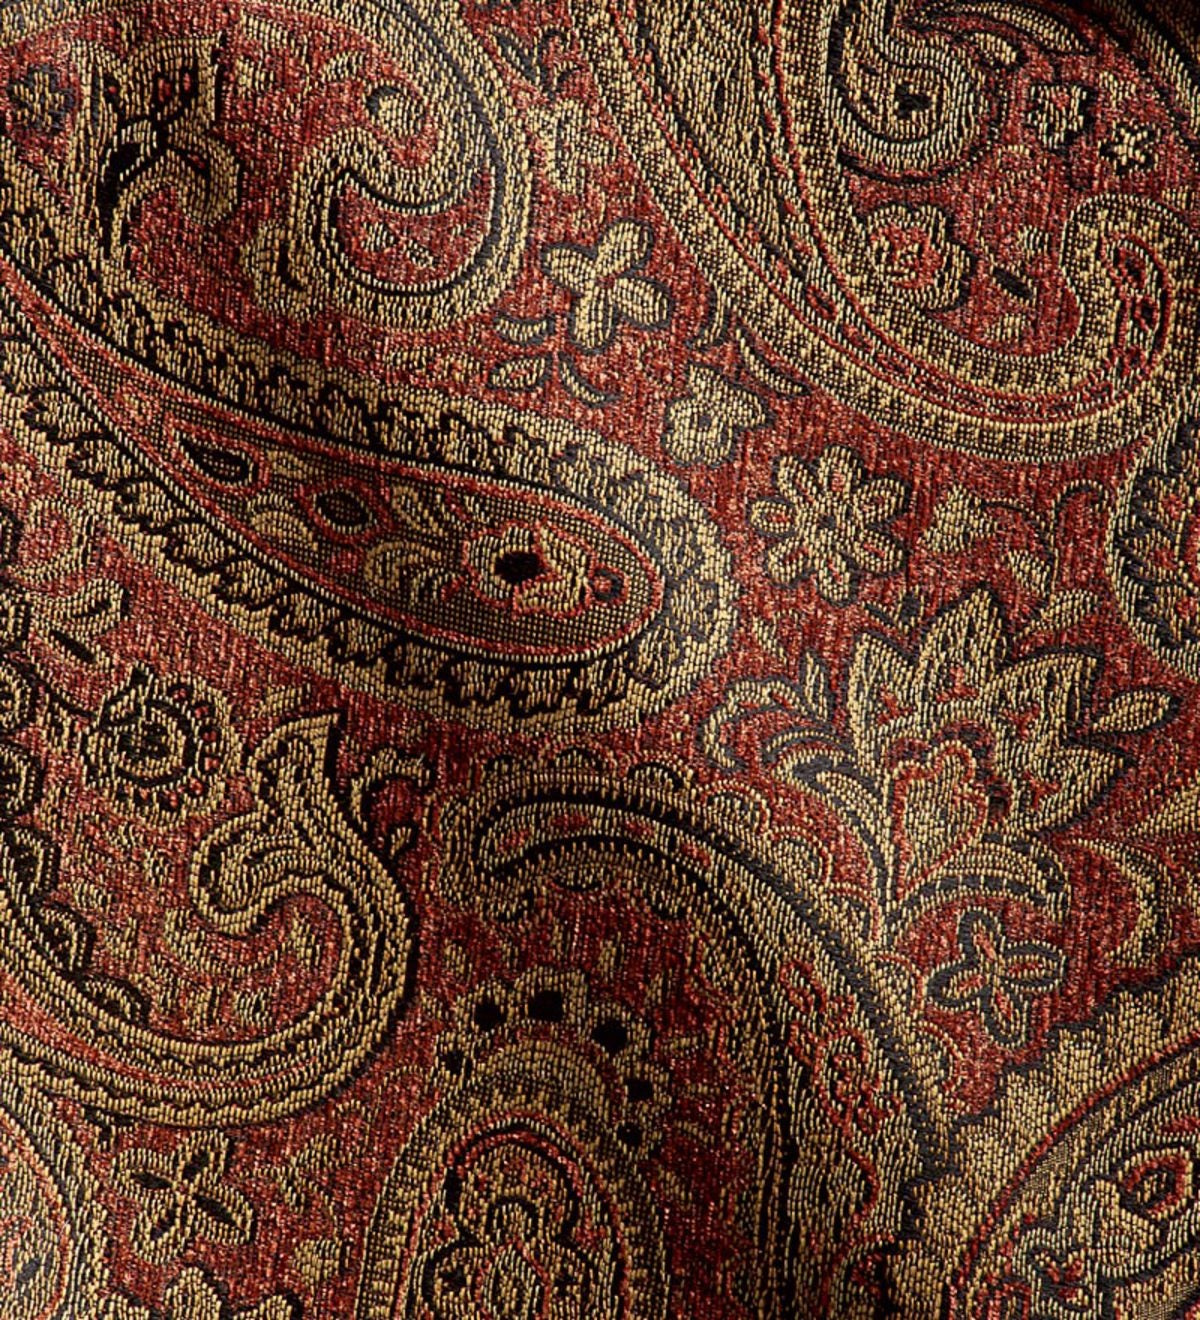 USA-Made Bedford Collection Upholstered Nigel Ottoman - Mahogany Paisley